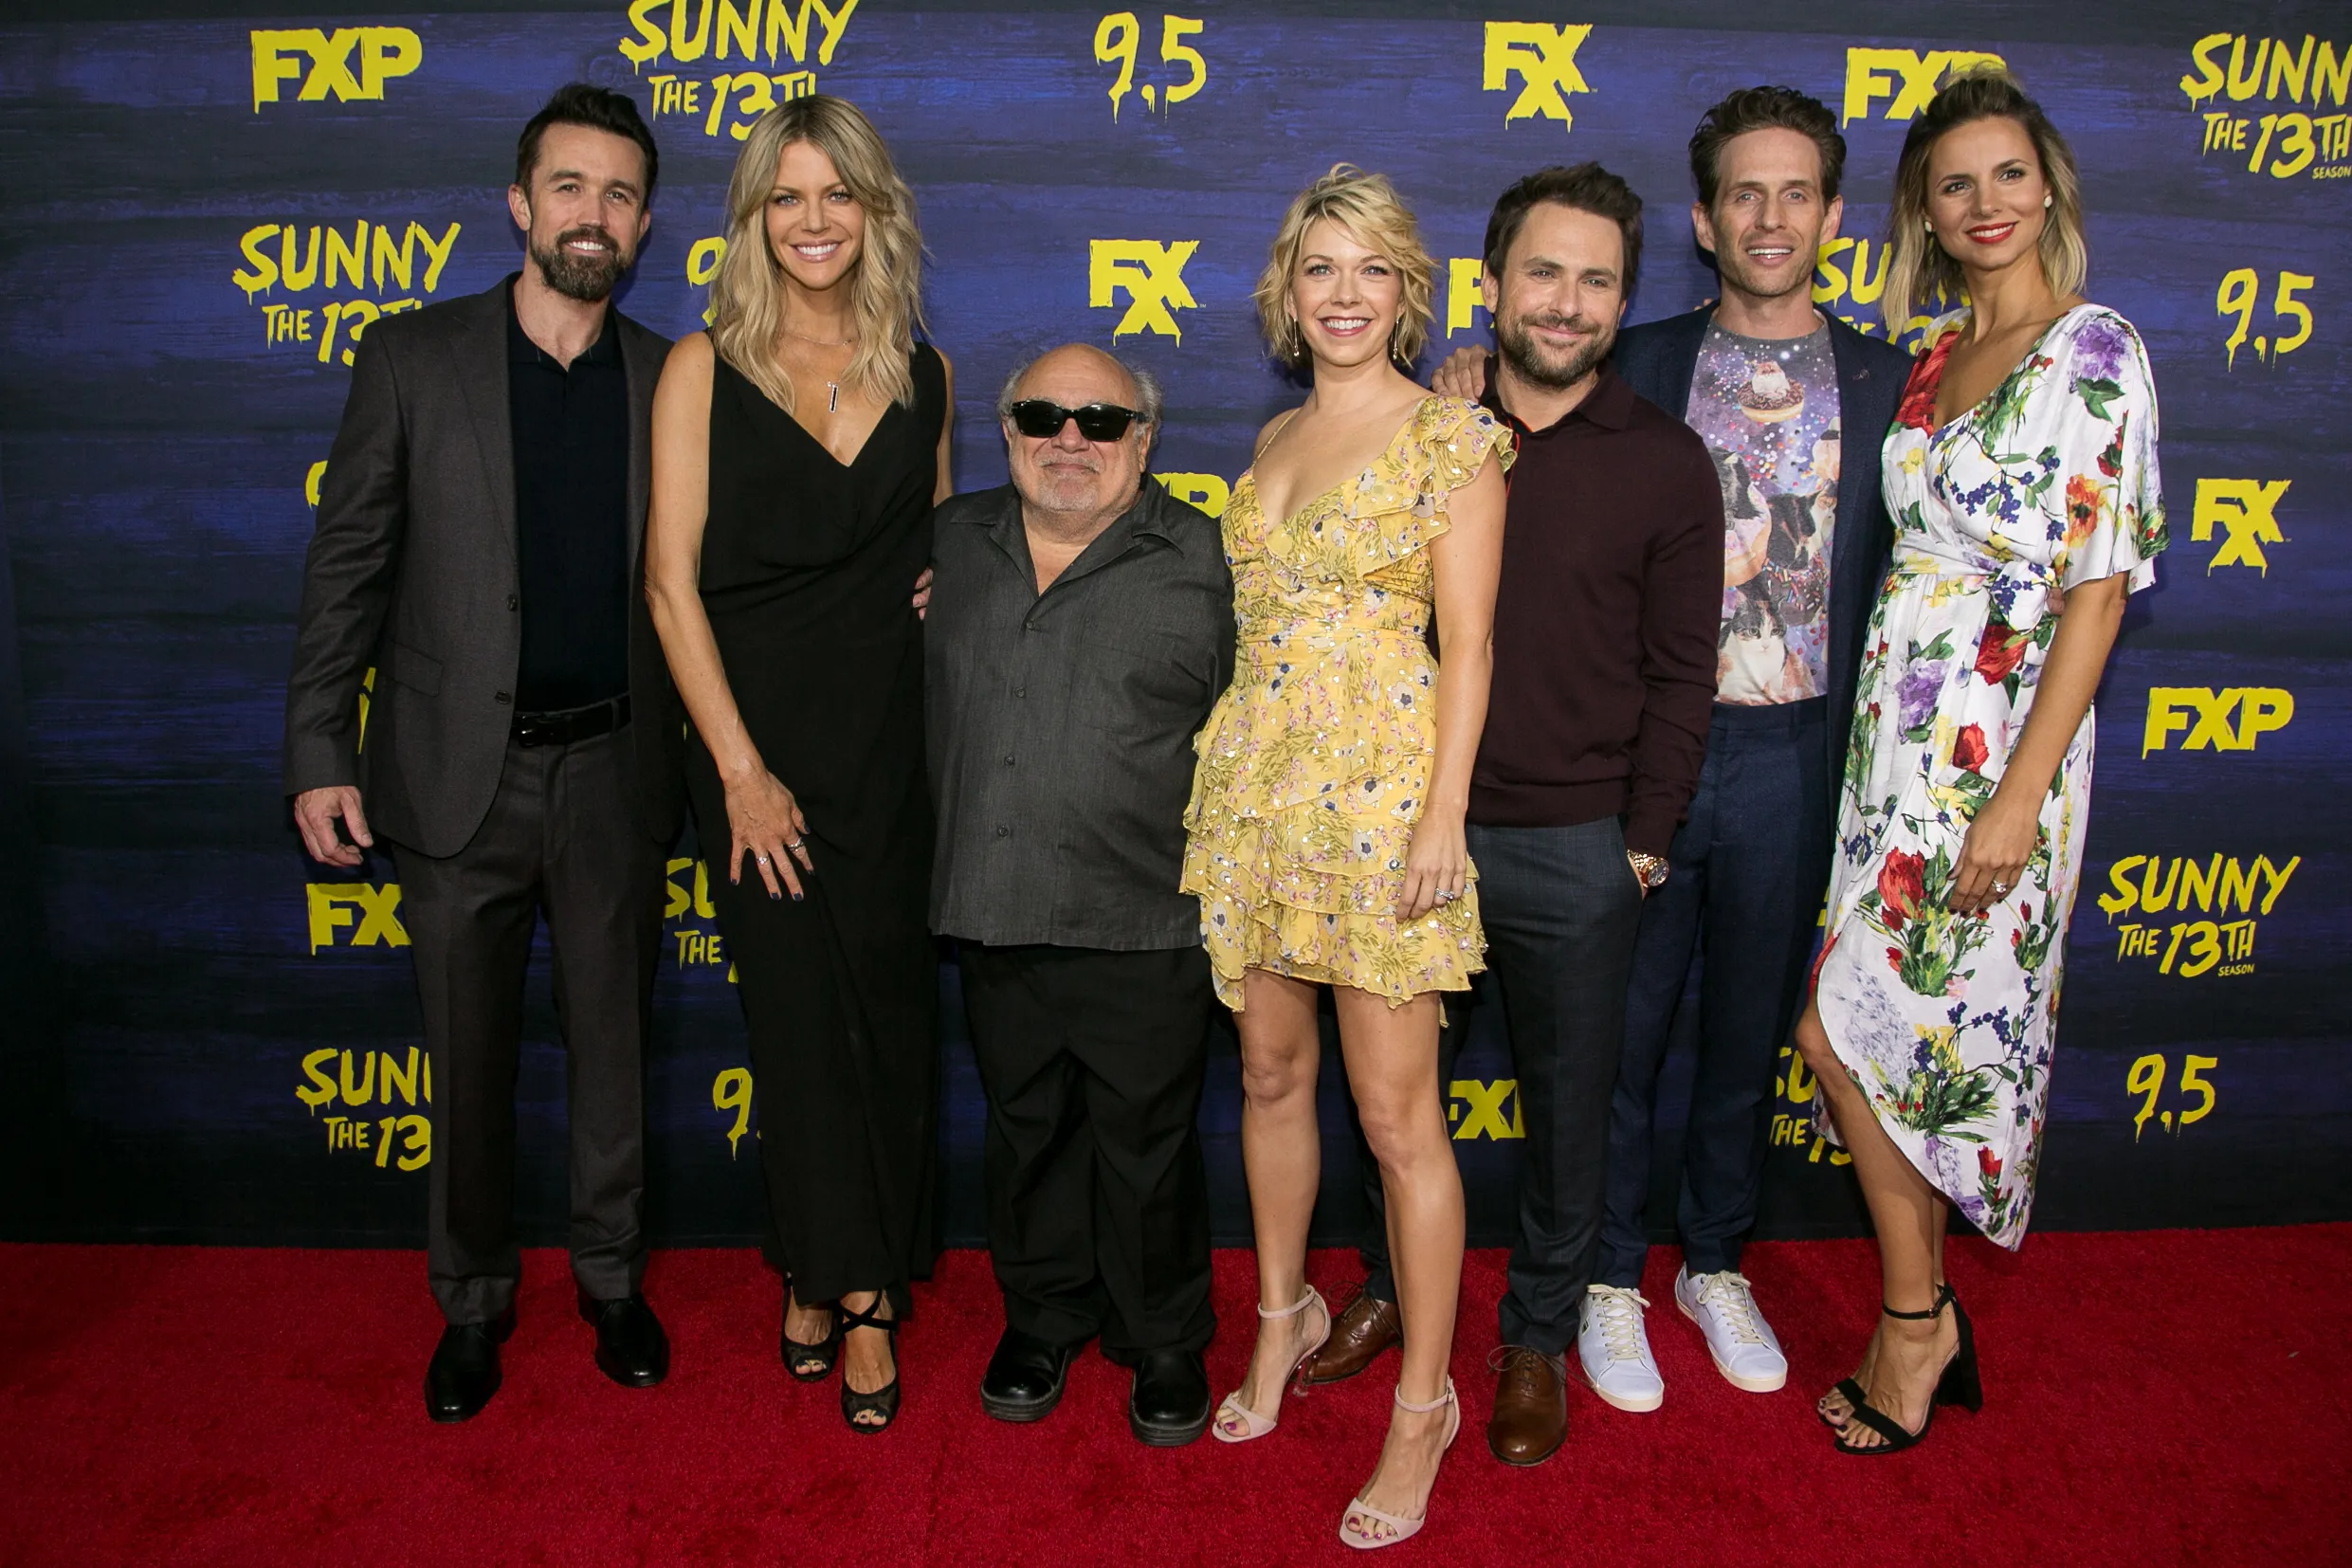 Premiere Of FXX's "It's Always Sunny In Philadelphia" Season 13 - Arrivals